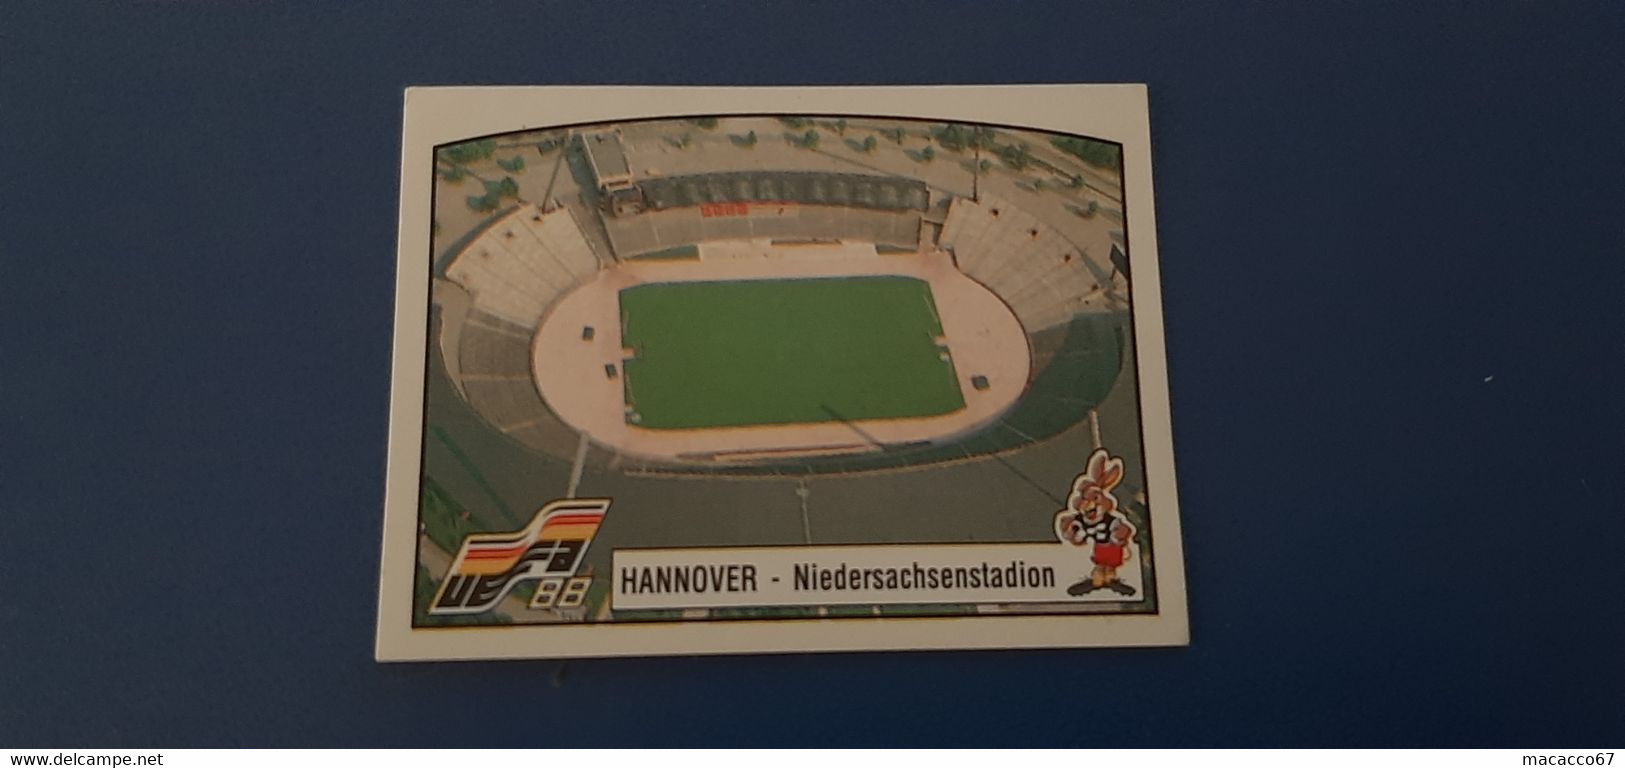 Panini EM Euro 88 - 032 Hannover Niedersachsenstadion - Edizione Italiana